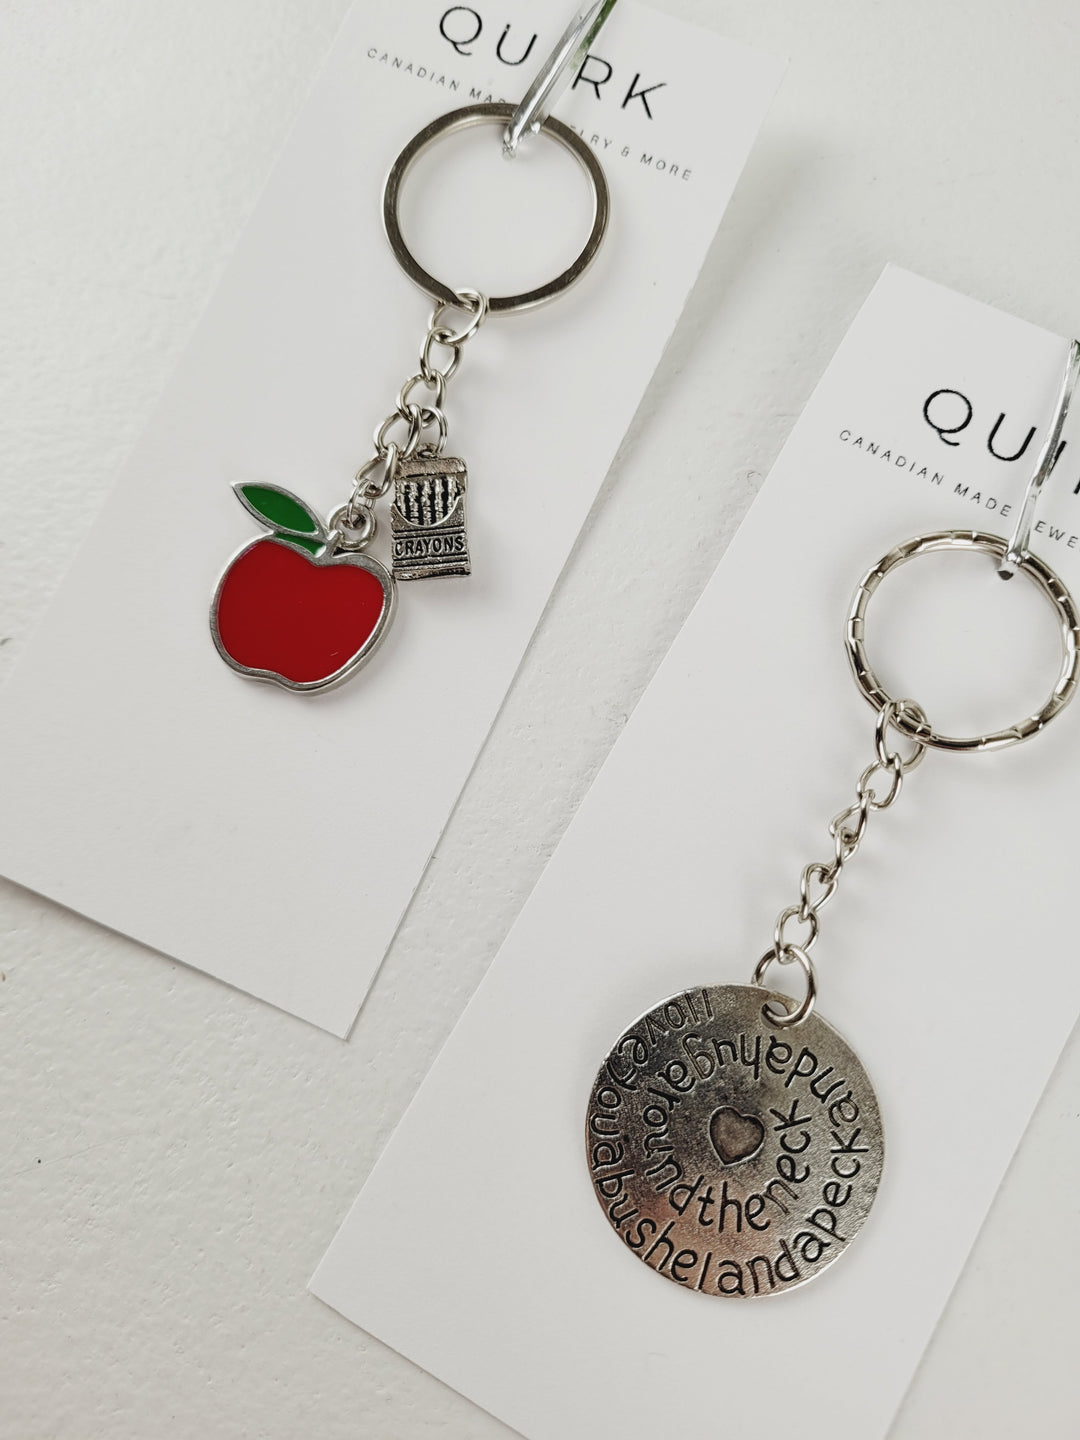 Quirk Handmade Jewelry, Keychains